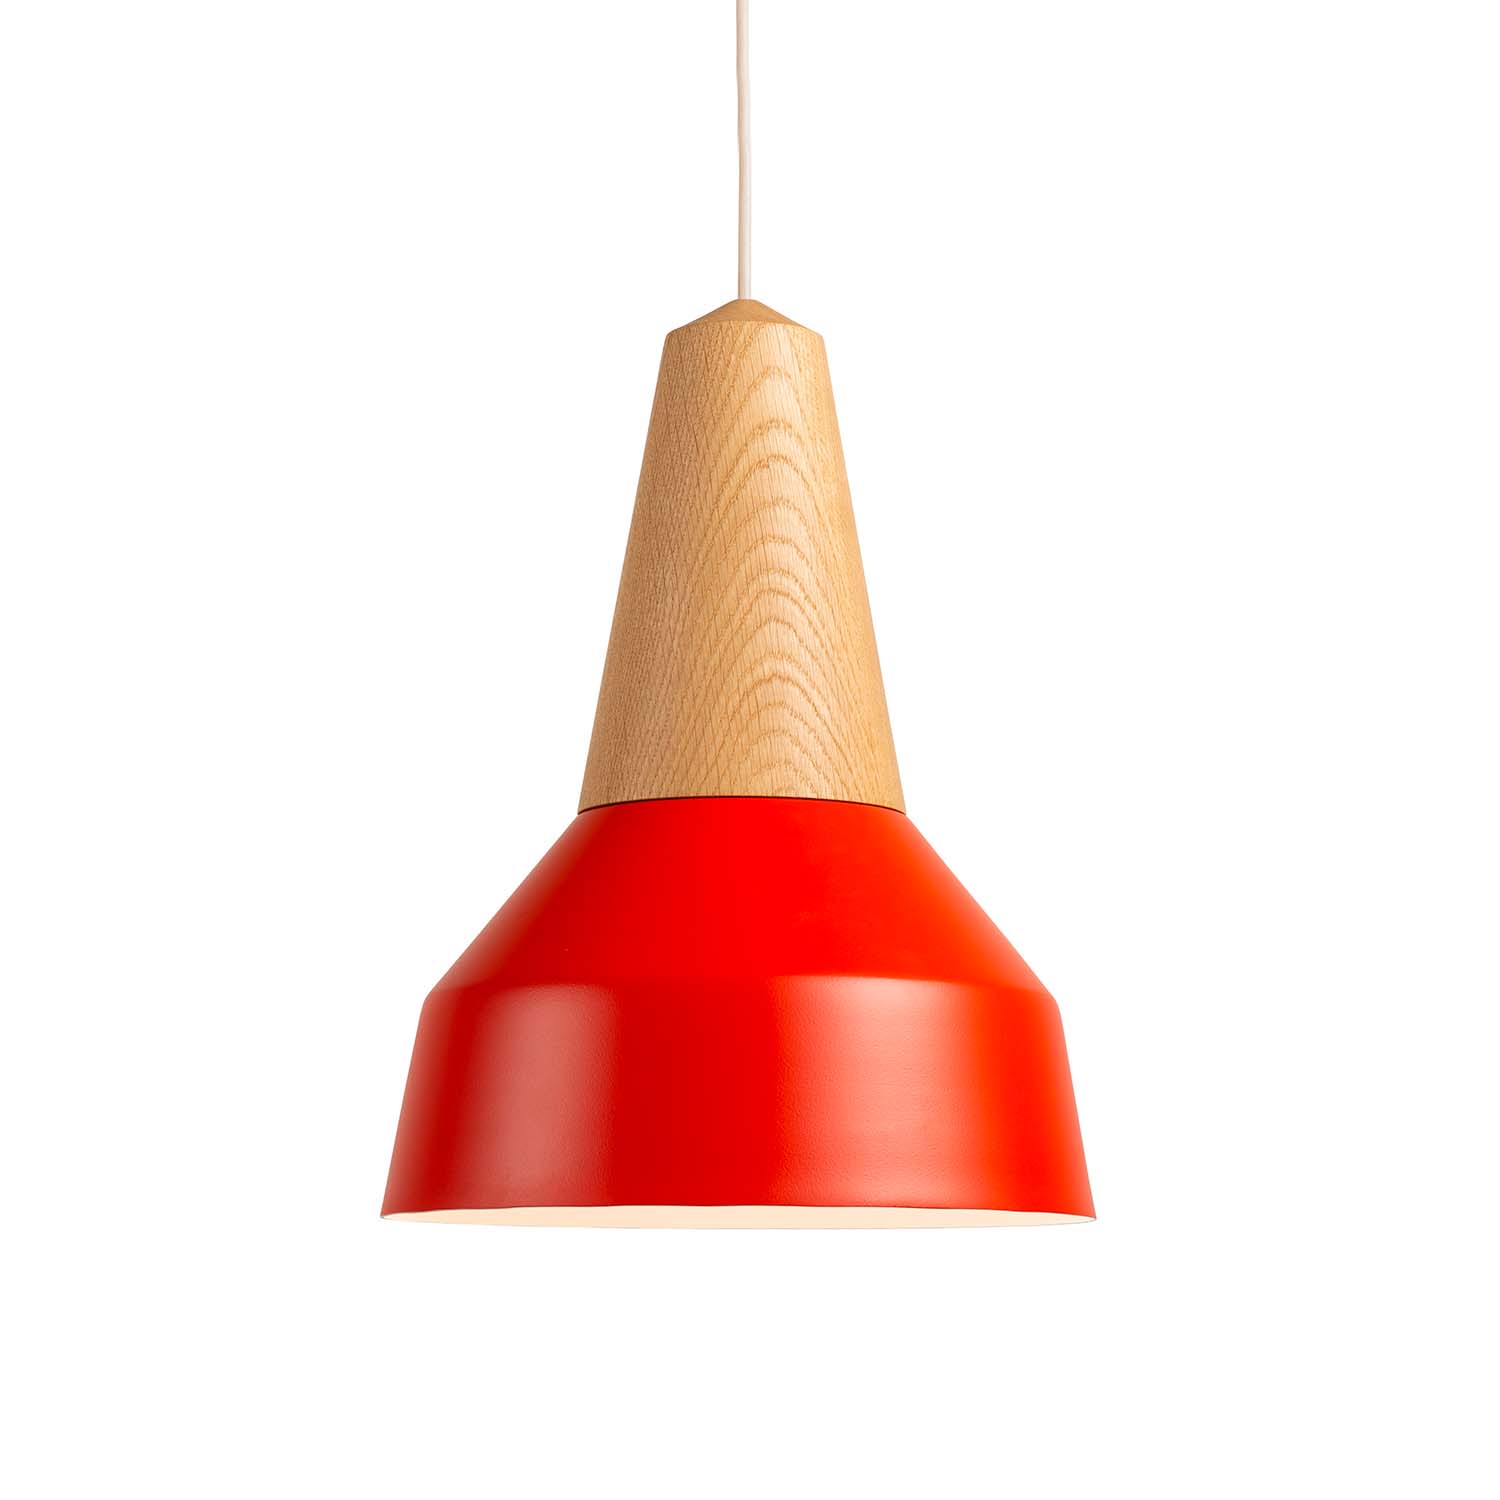 EIKON BASIC - Scandinavian conical pendant light, colorful and wood